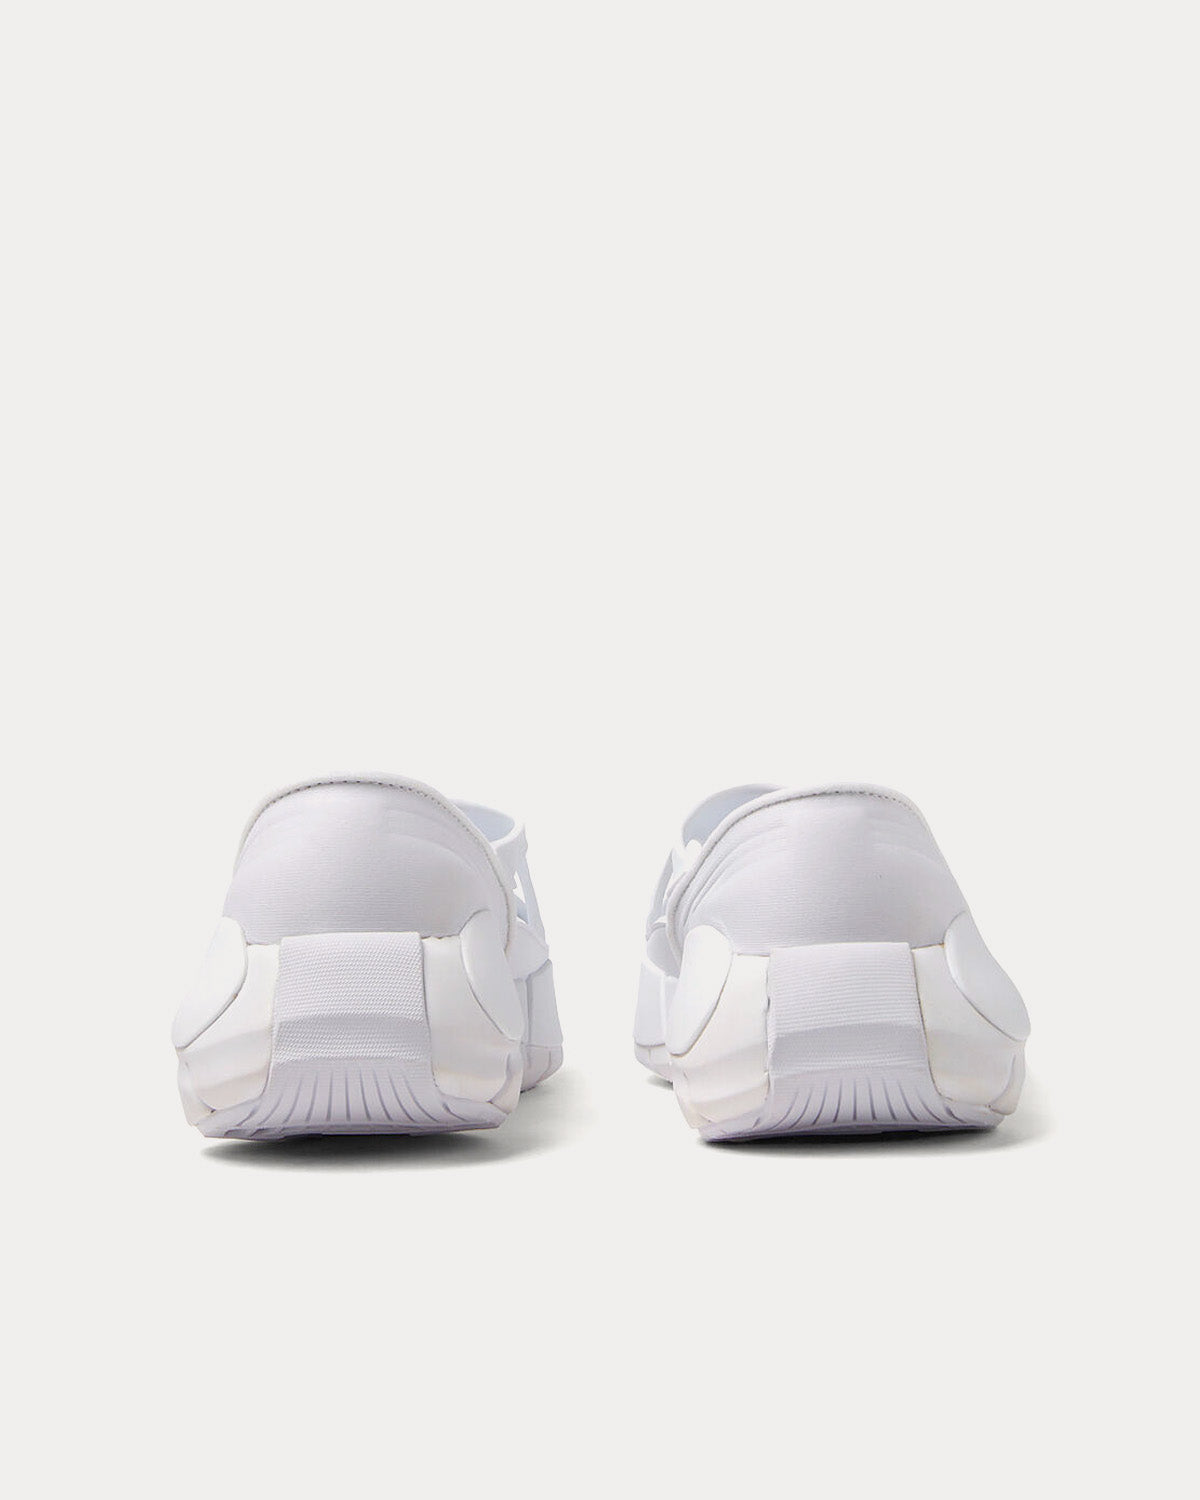 Reebok X Maison Margiela - Tier 1 Croafer White Slip On Sneakers